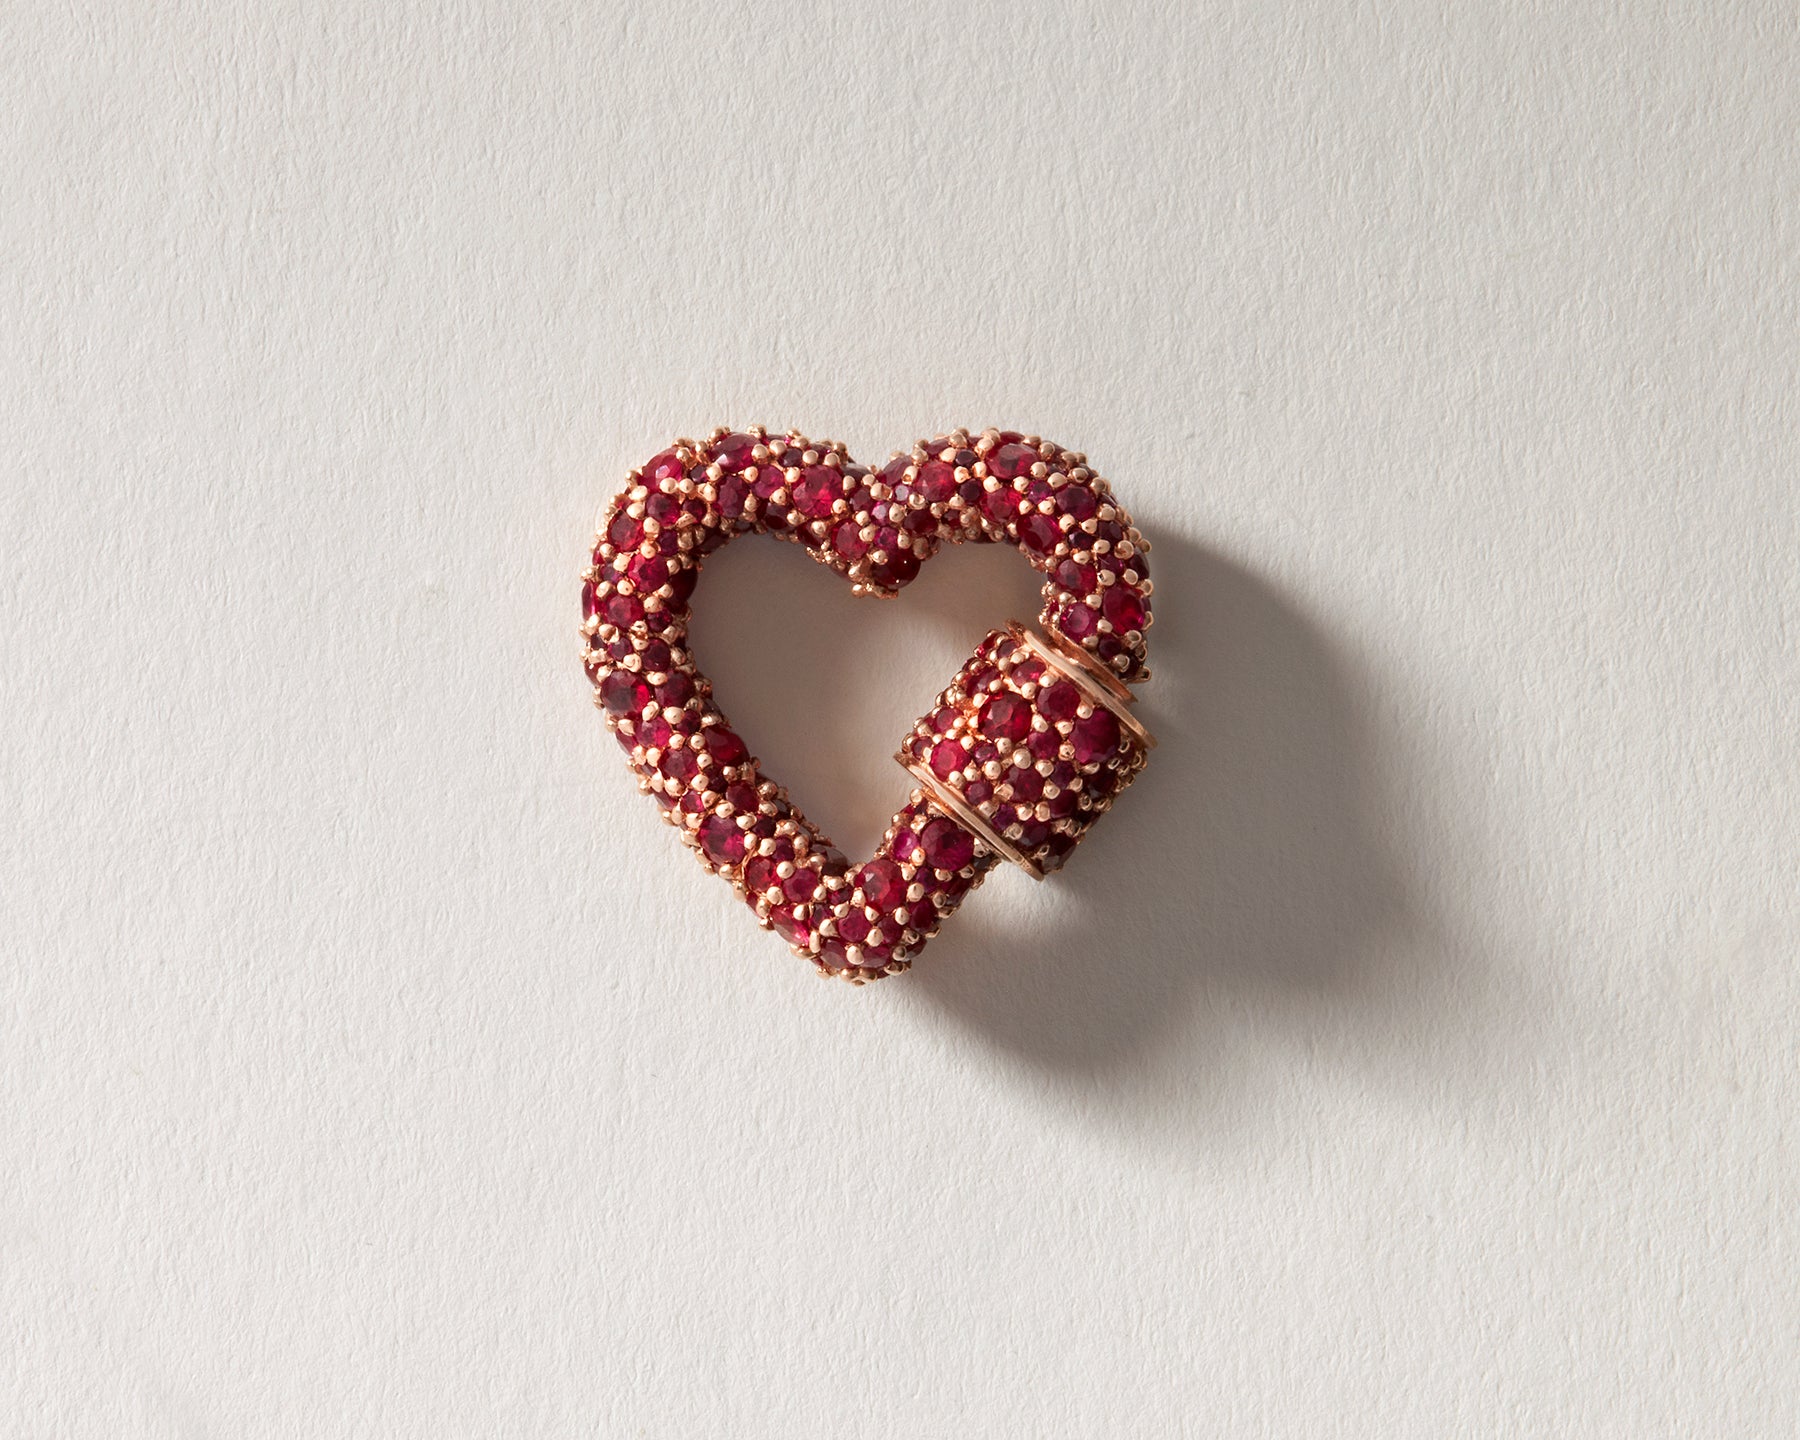 Rose gold ruby heart pendant charm against cream backdrop